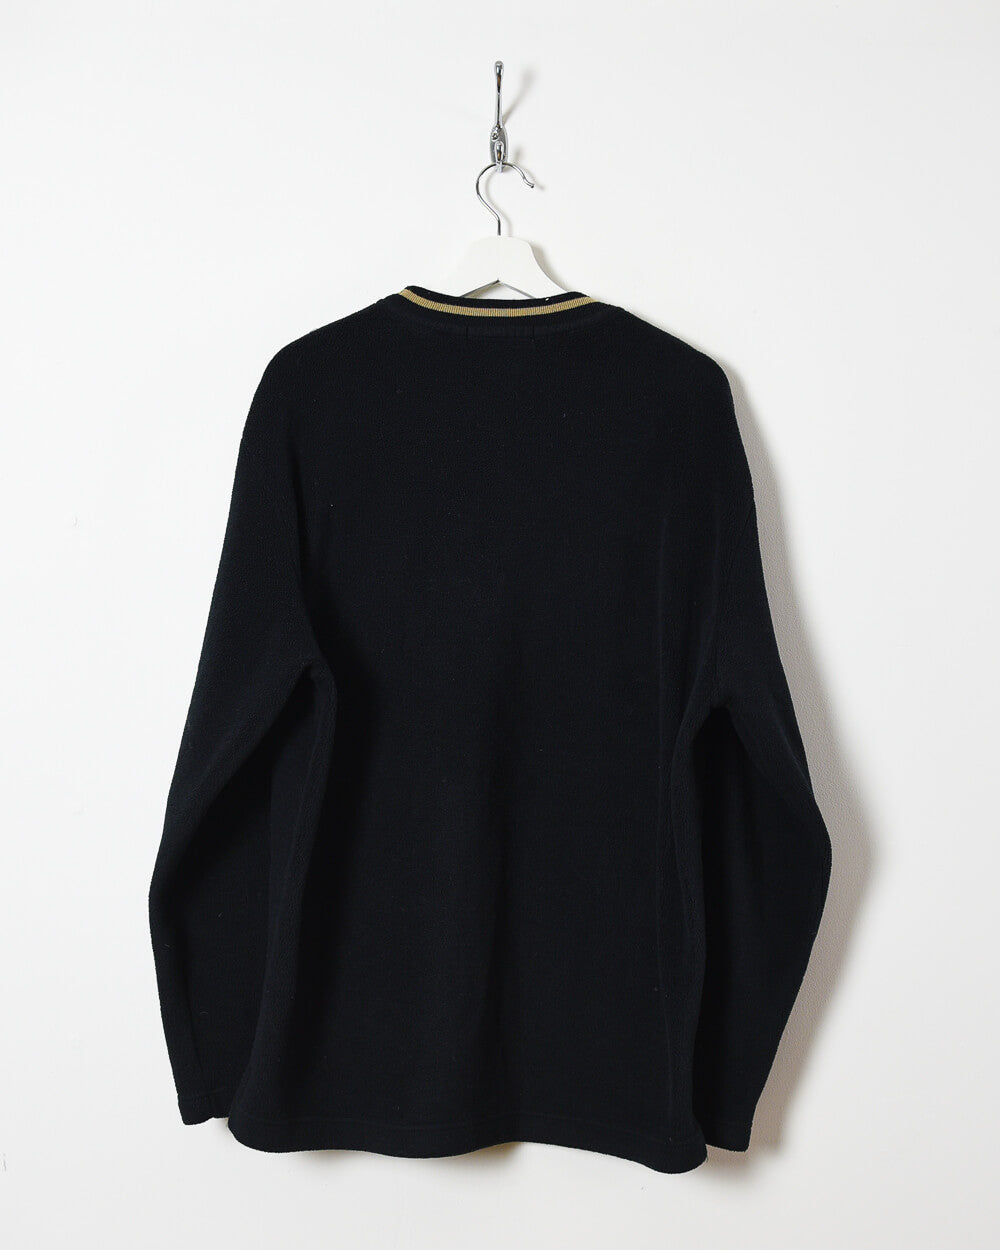 Black Fila Pullover Fleece - X-Large